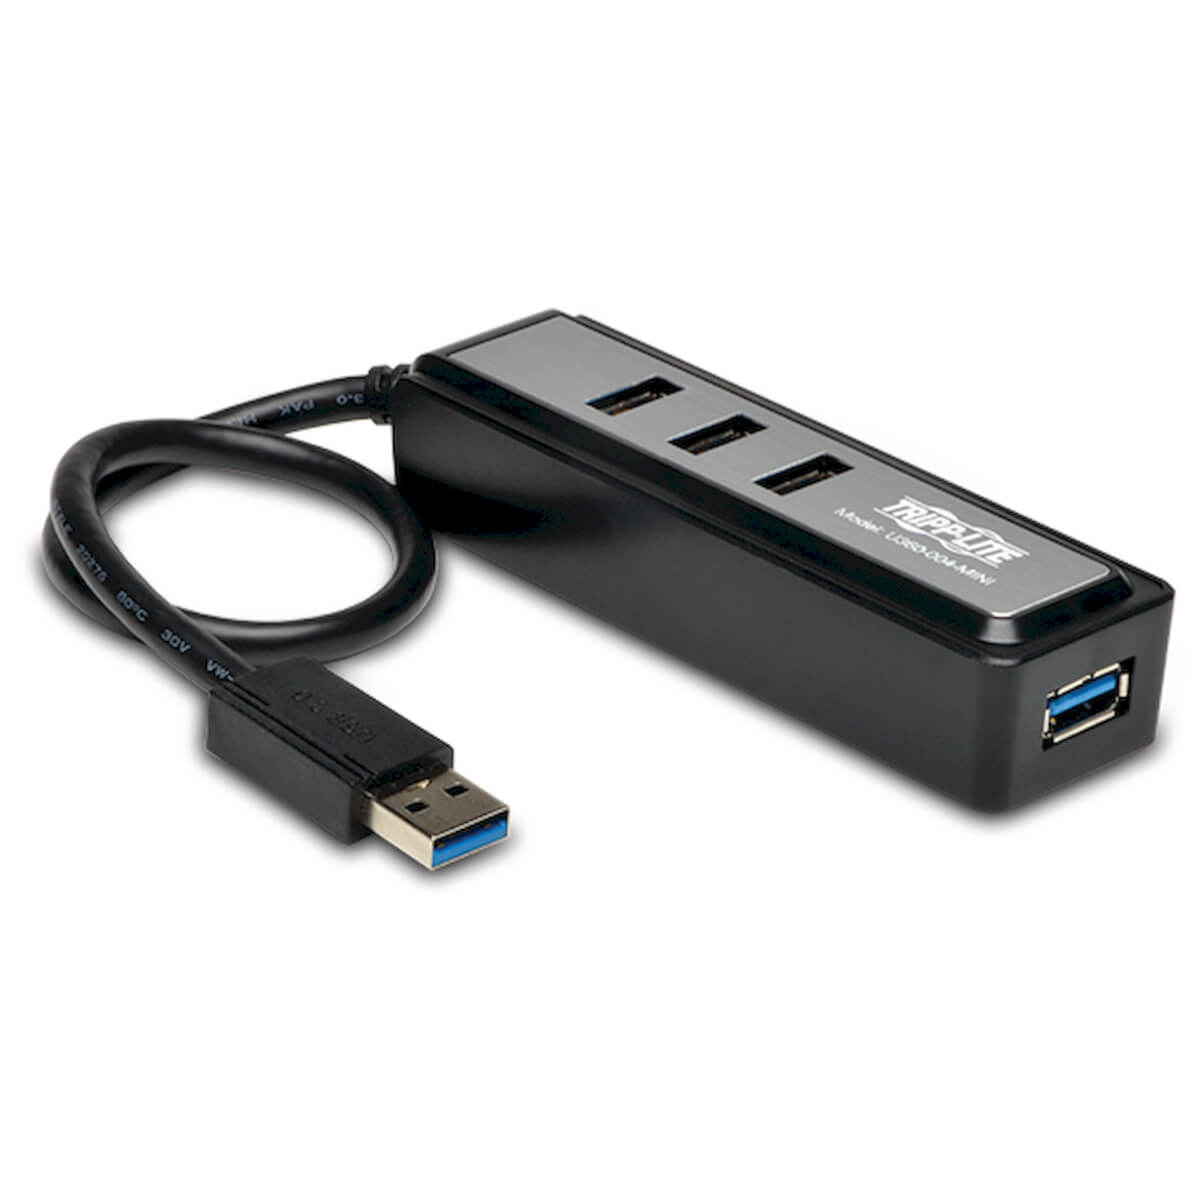 Tripplite Rozbočovač 4x USB 3.0 SuperSpeed, malý, přenosný